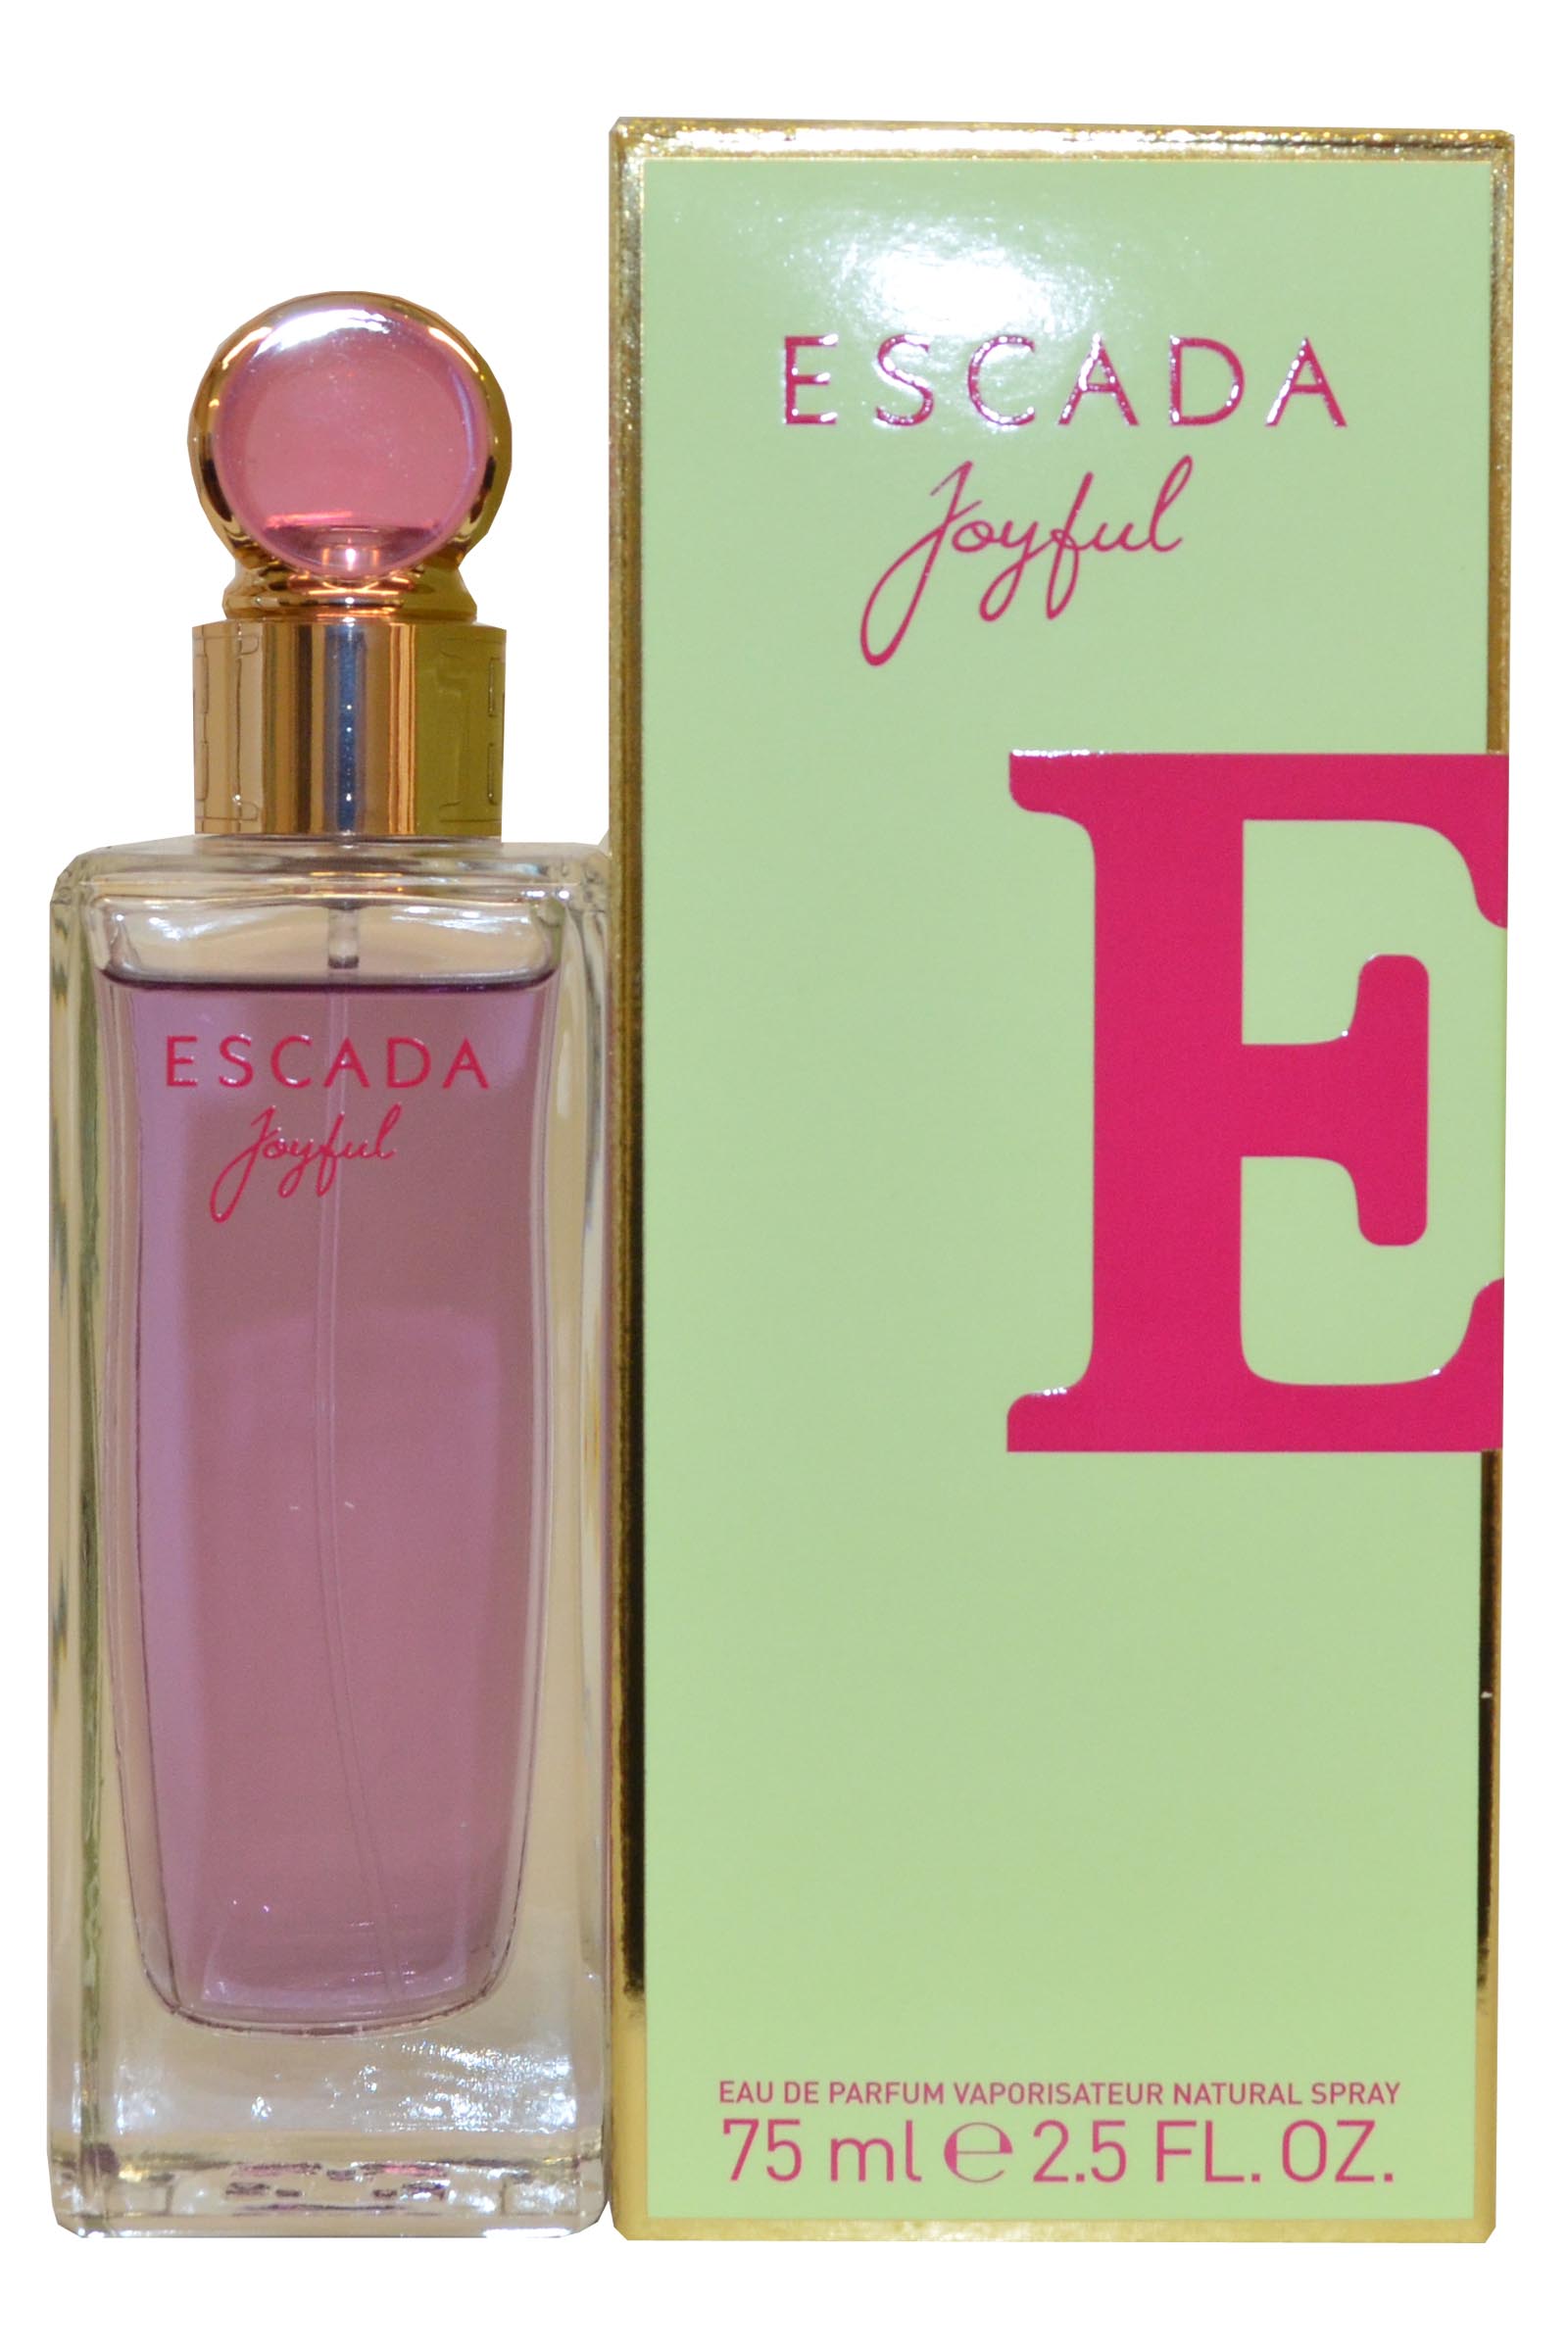 Escada Joyful EDP Eau de Parfum Spray 75ml Womens Perfume | eBay